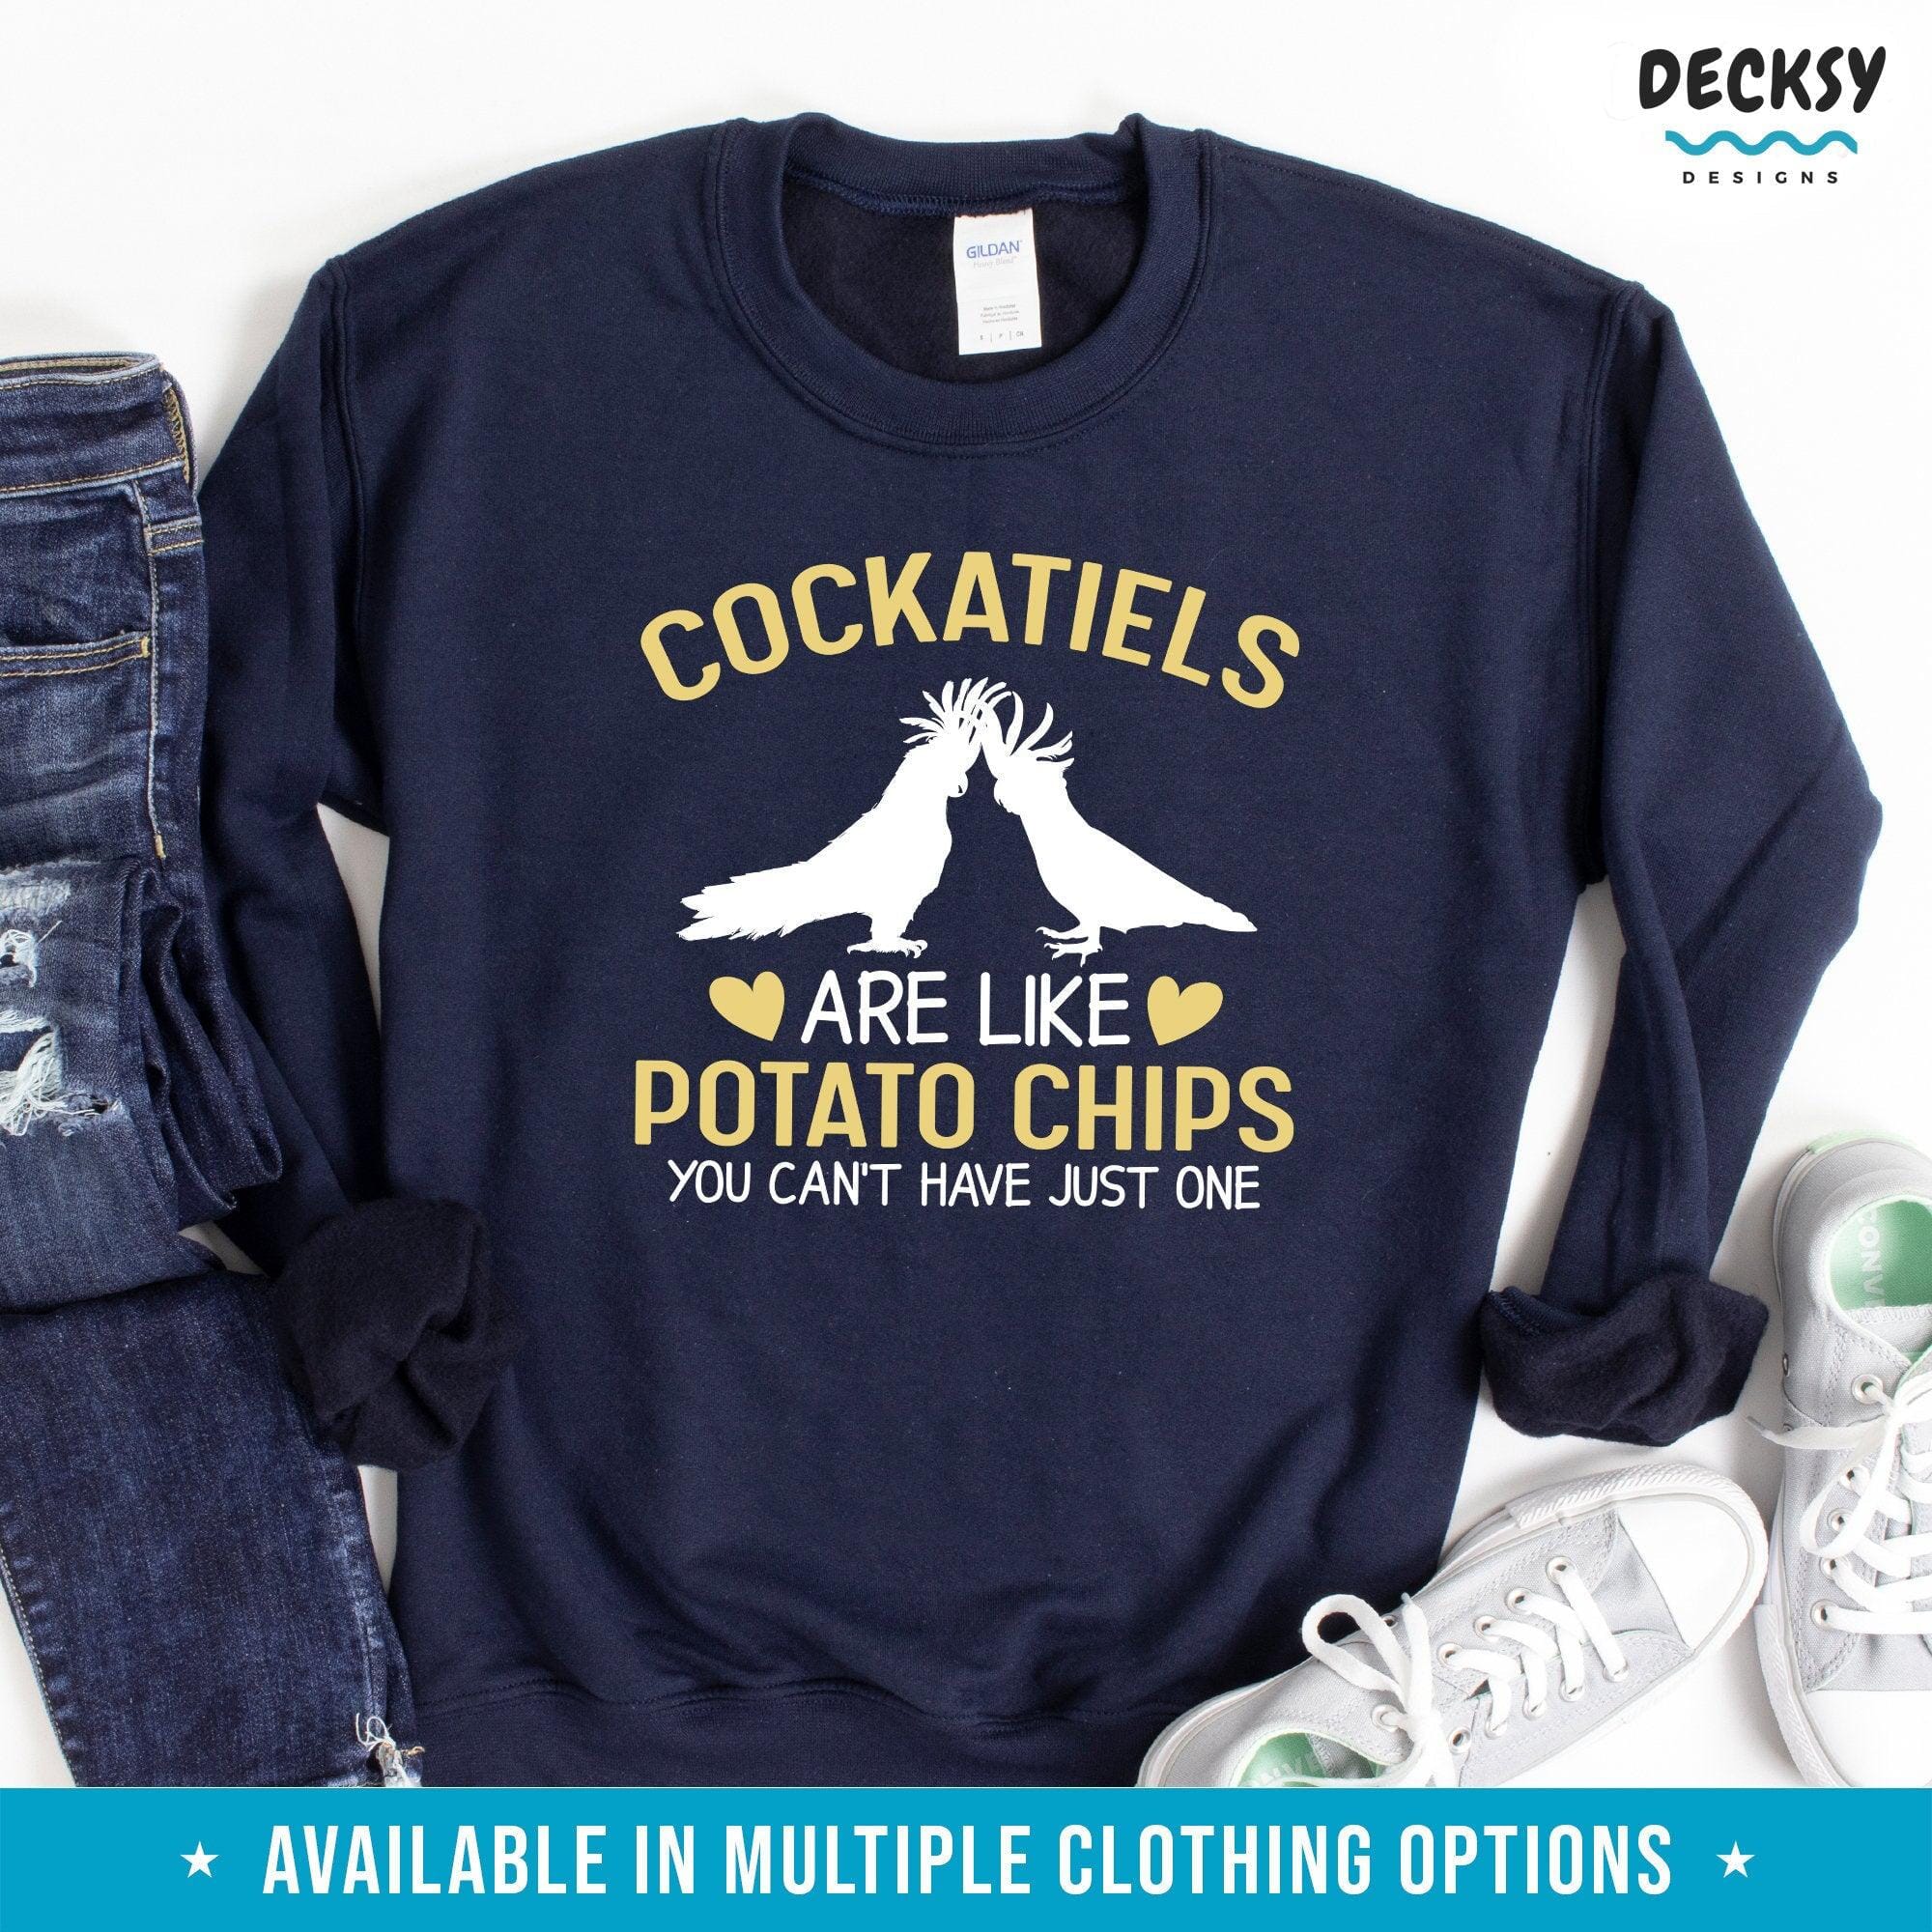 Cockatiel Shirt, Bird Lover Gift, Cockatiel Owner Sweatshirt Hoodie-Clothing:Gender-Neutral Adult Clothing:Tops & Tees:T-shirts:Graphic Tees-DecksyDesigns